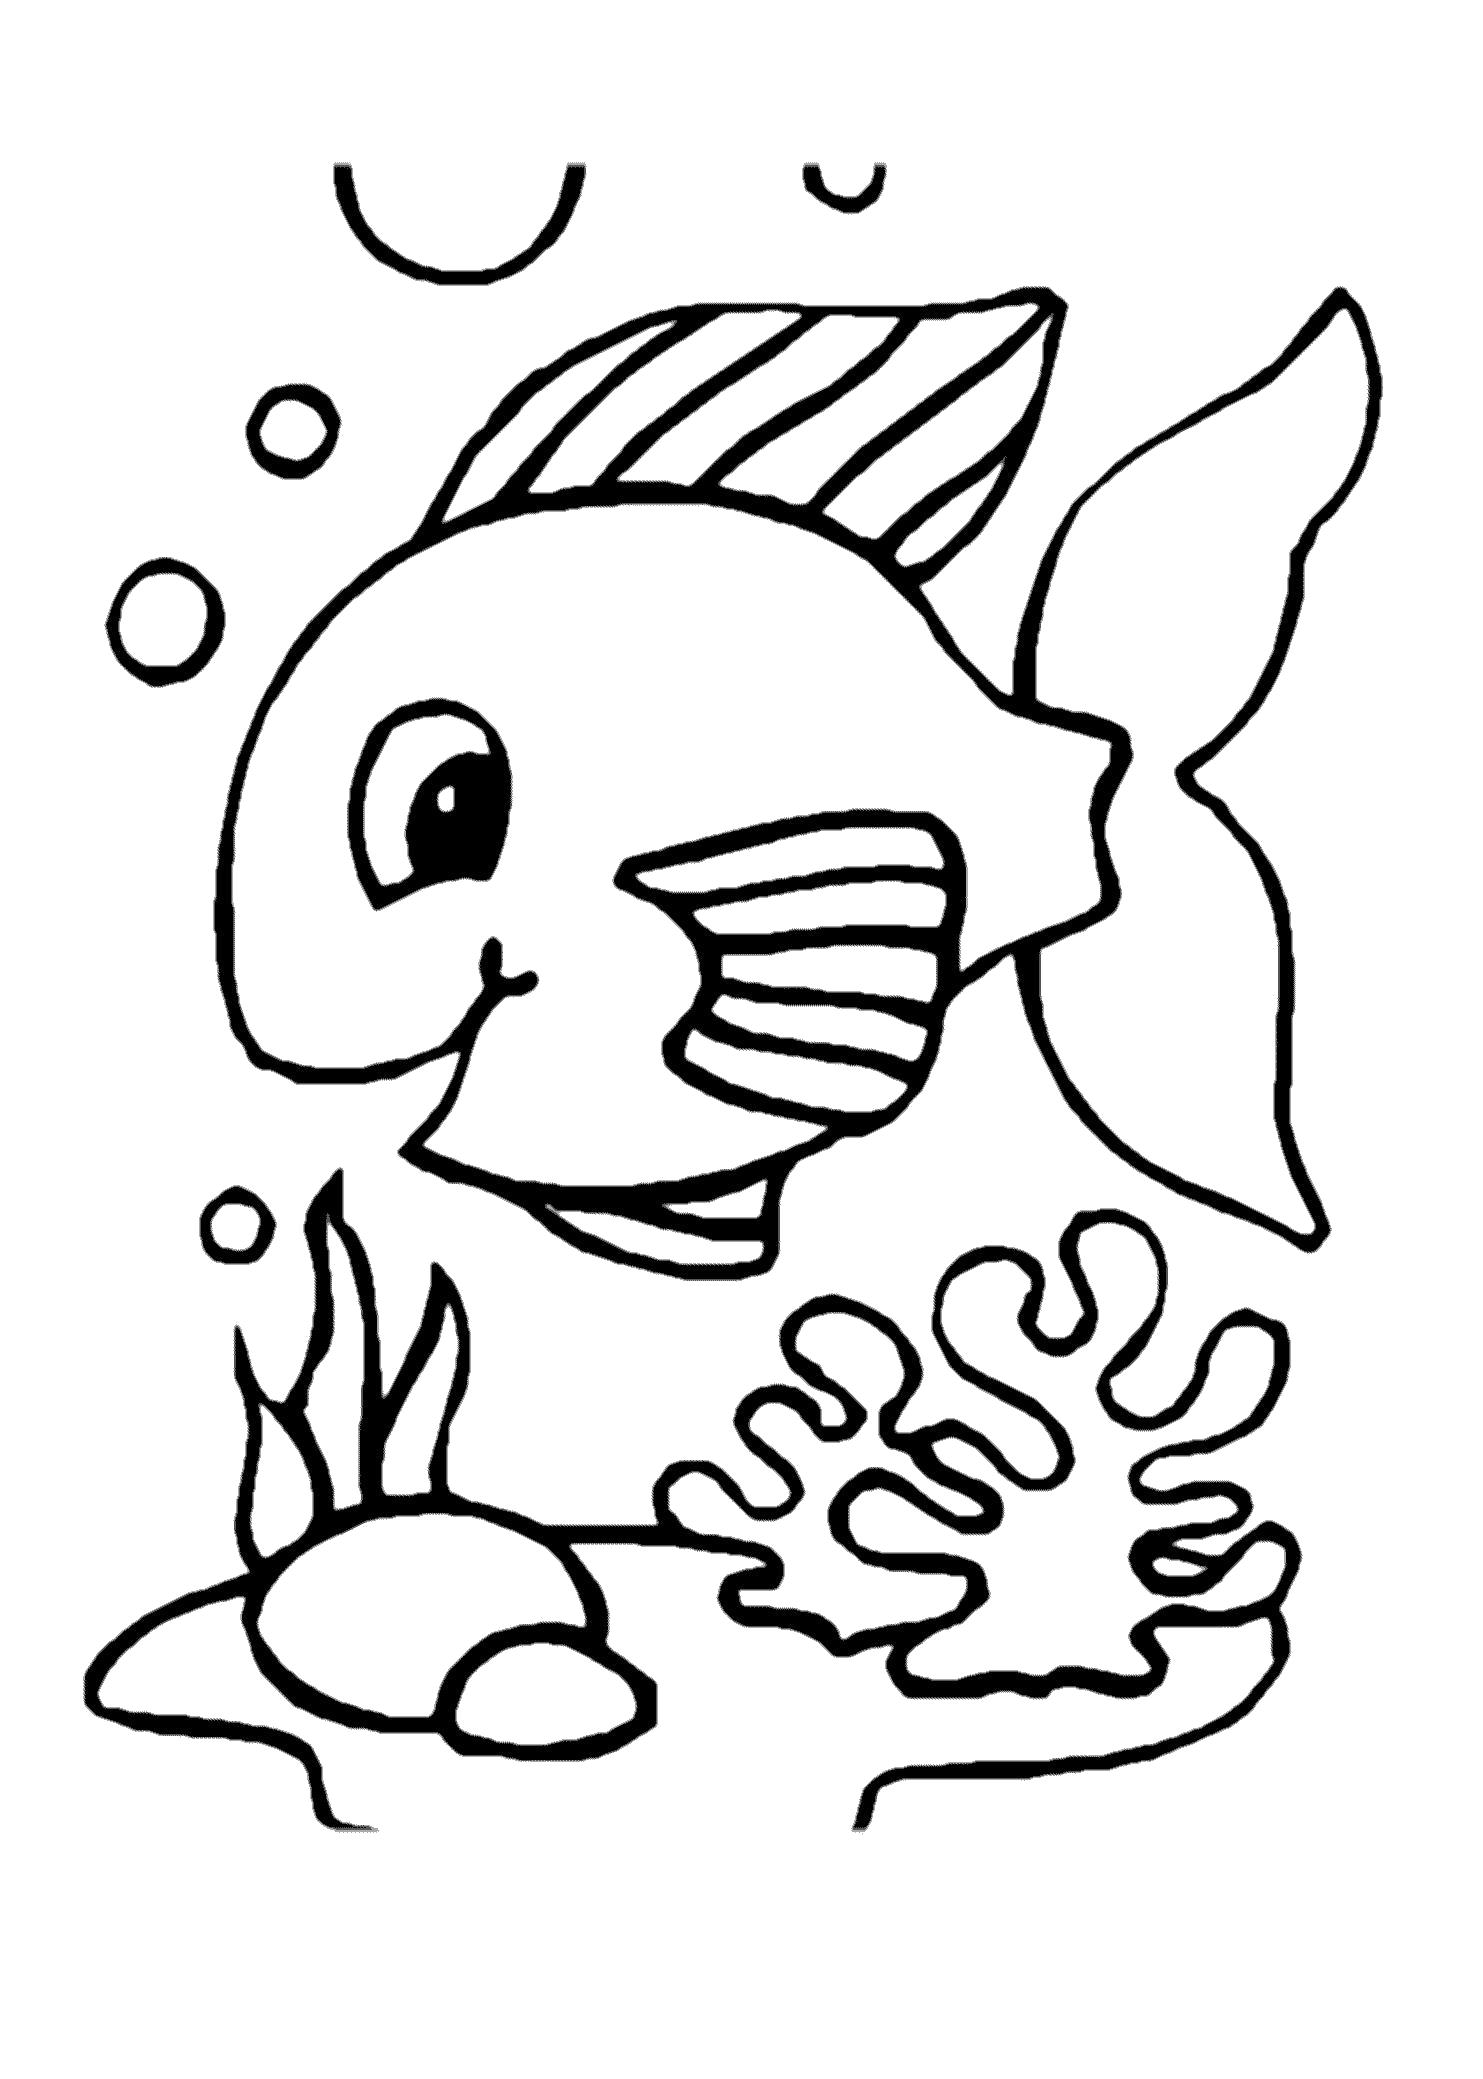 Раскраски рыбки для детей 3 4 лет. Раскраска рыбка. Рыбка раскраска для детей. Рыба раскраска для детей. Рыбка картинка для детей раскраска.